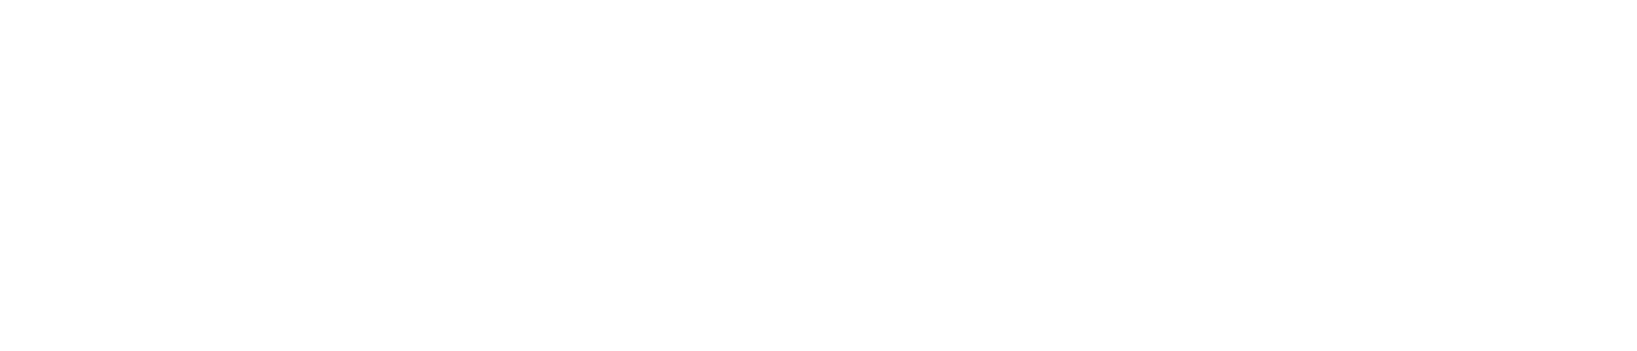 Diageo logo large for dark backgrounds (transparent PNG)